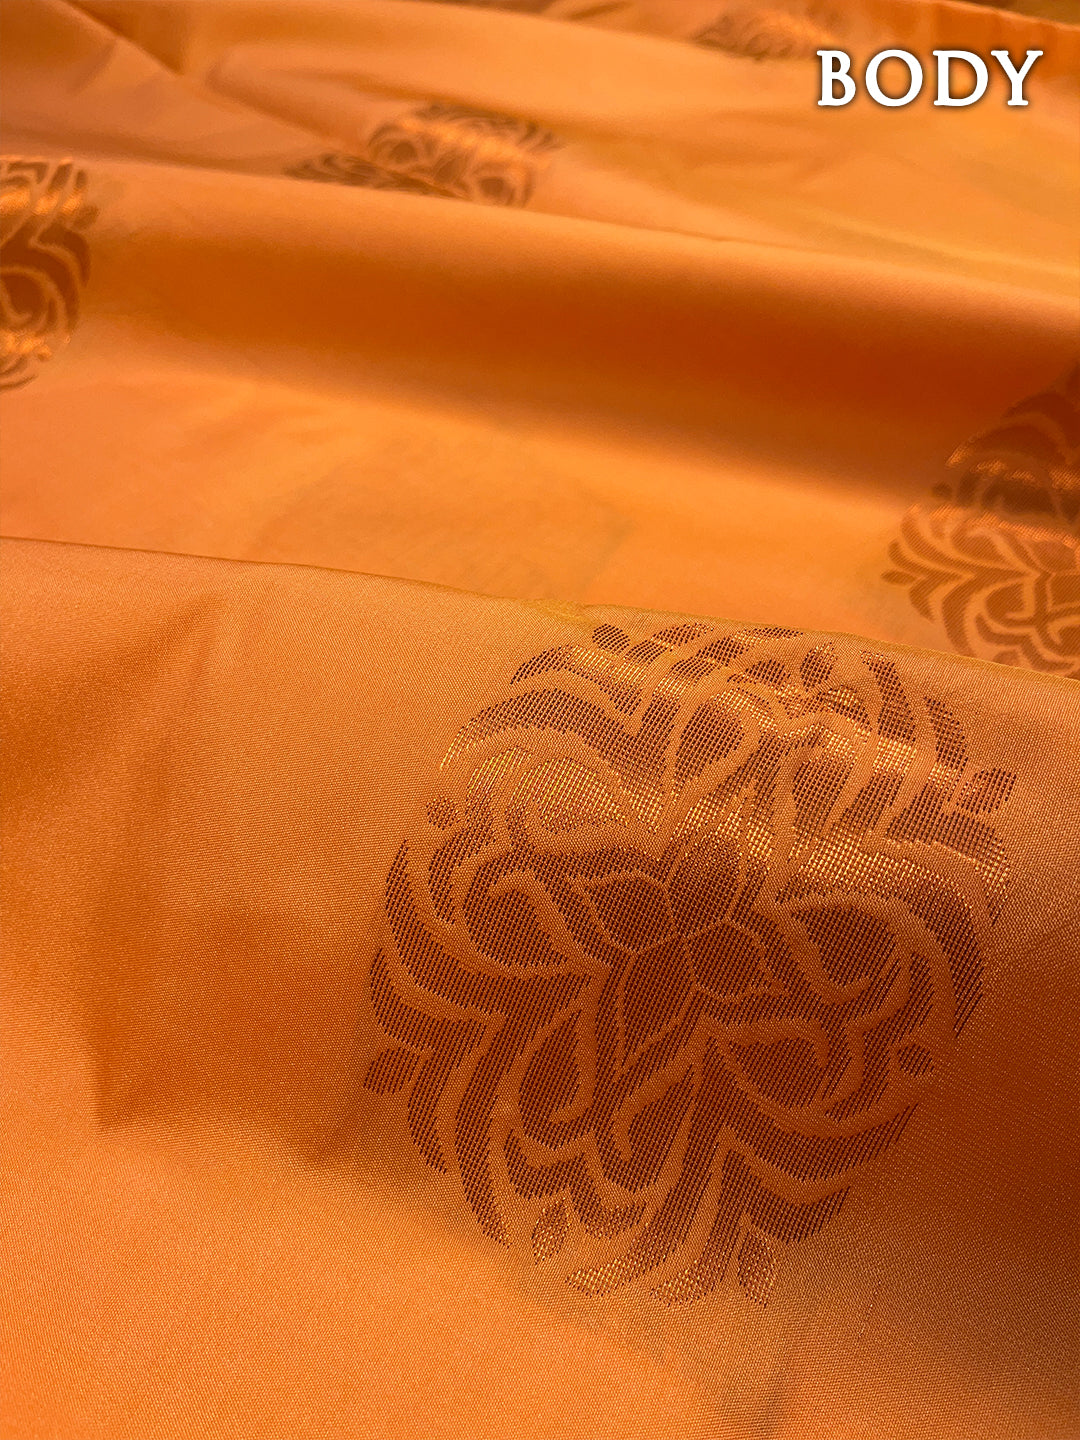 Dual color of orange and maroon kanchipuram semi soft silk saree